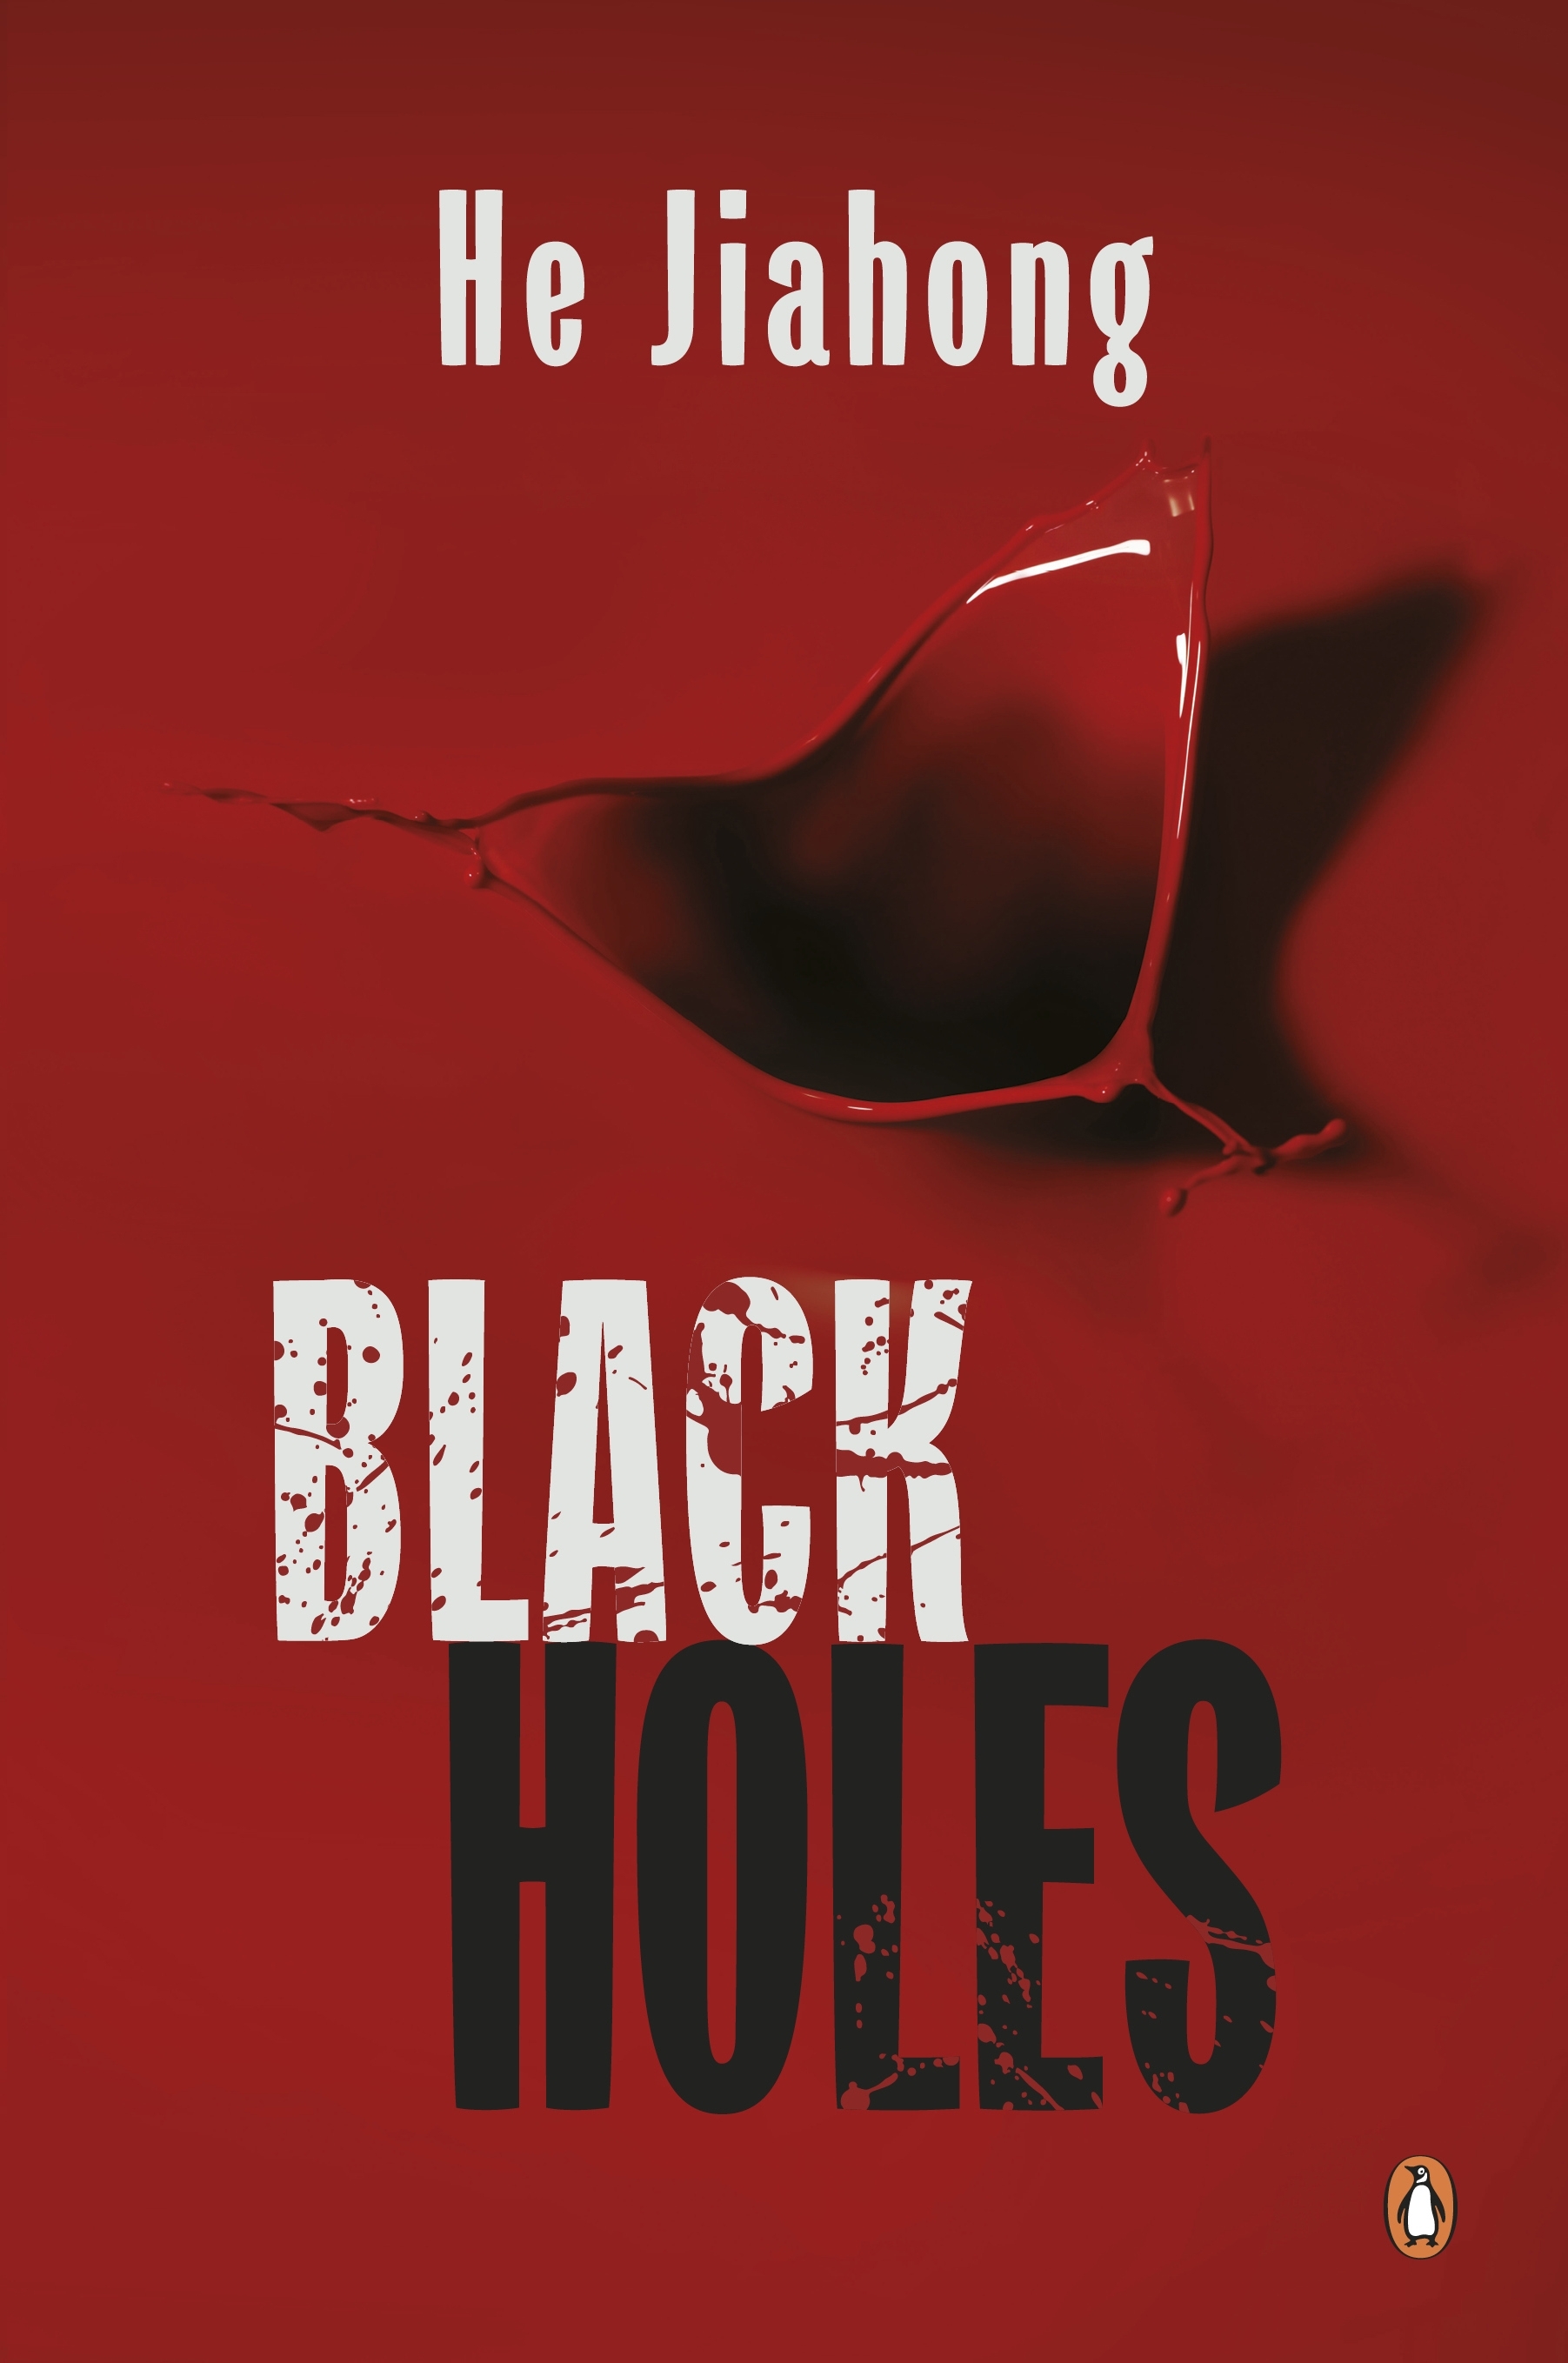 black holes book review